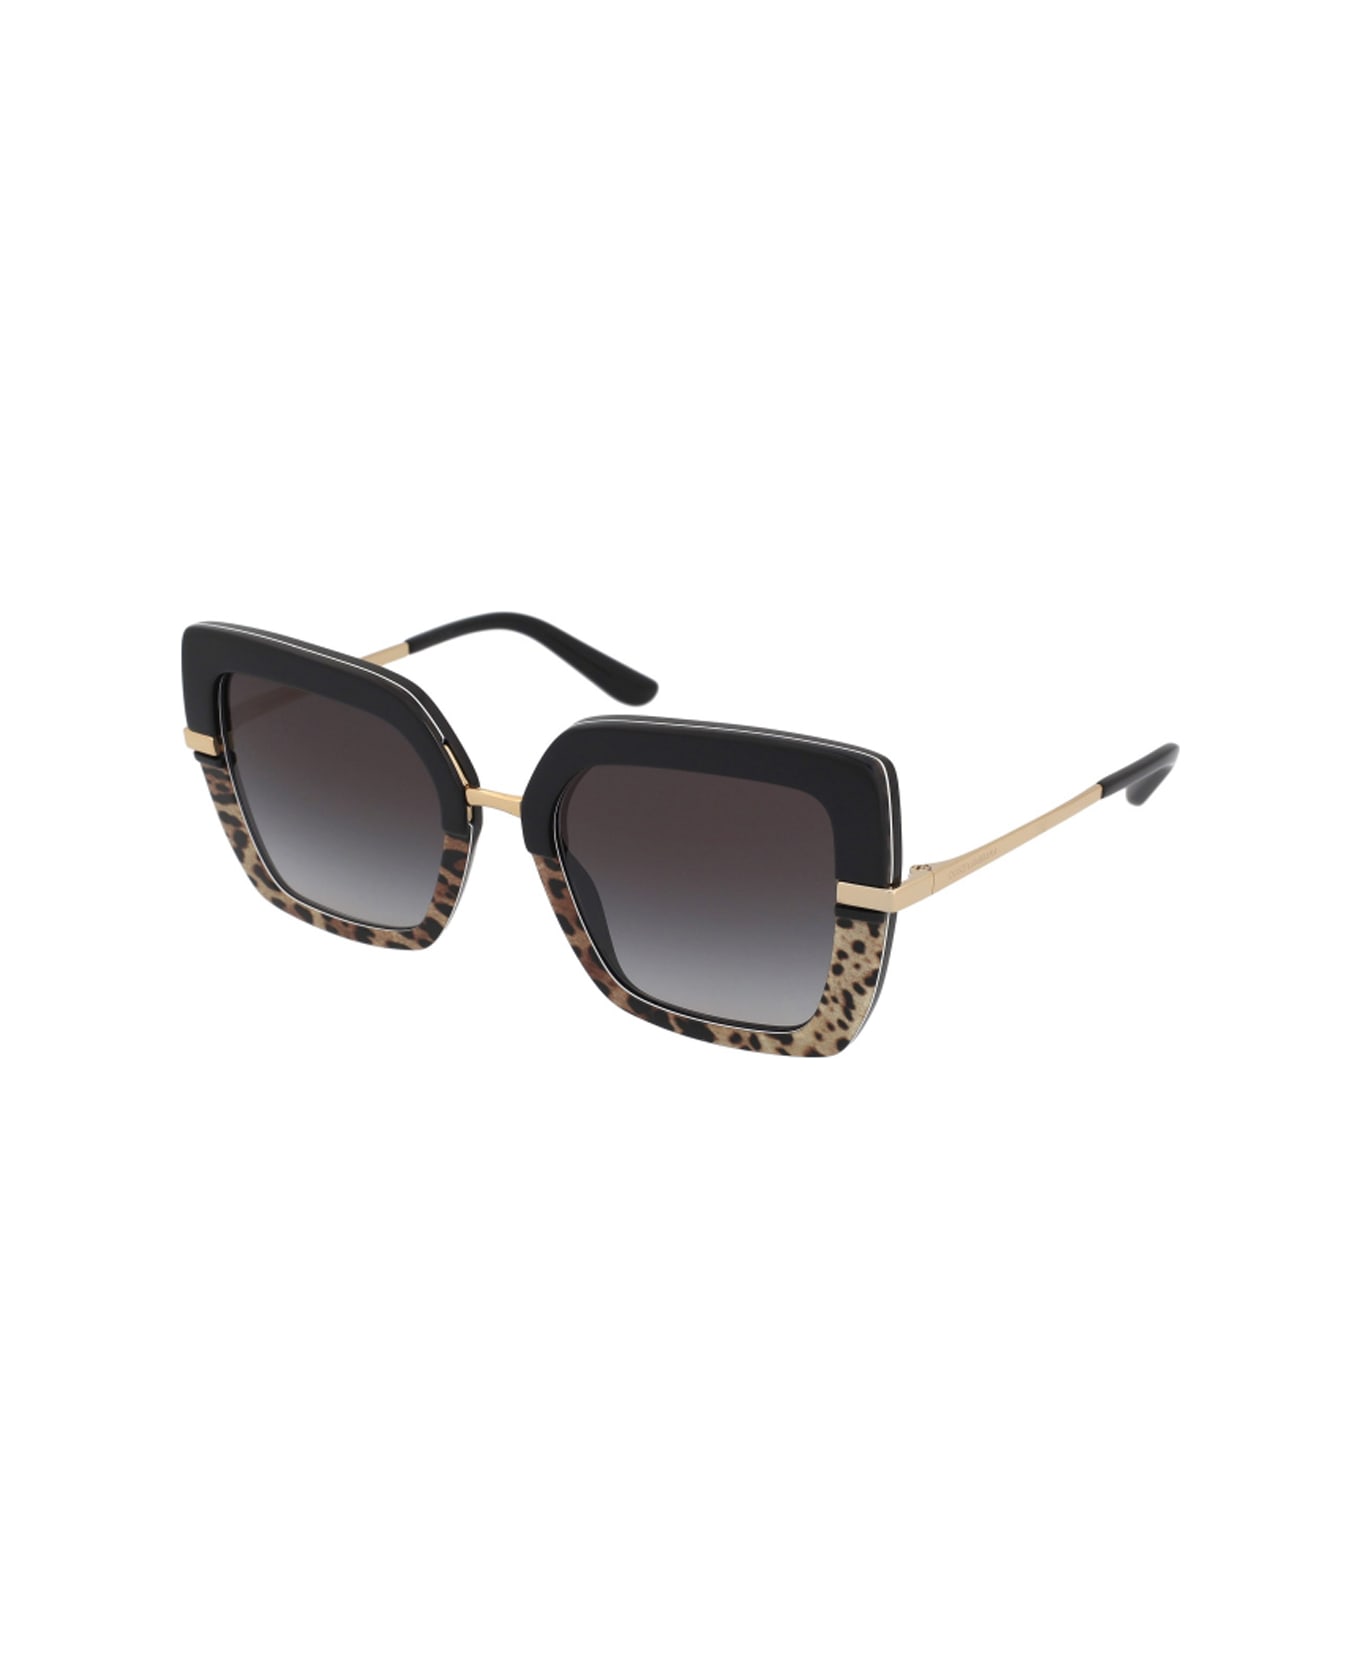 Dolce & Gabbana Eyewear Dg4373 32448g Sunglasses - Nero